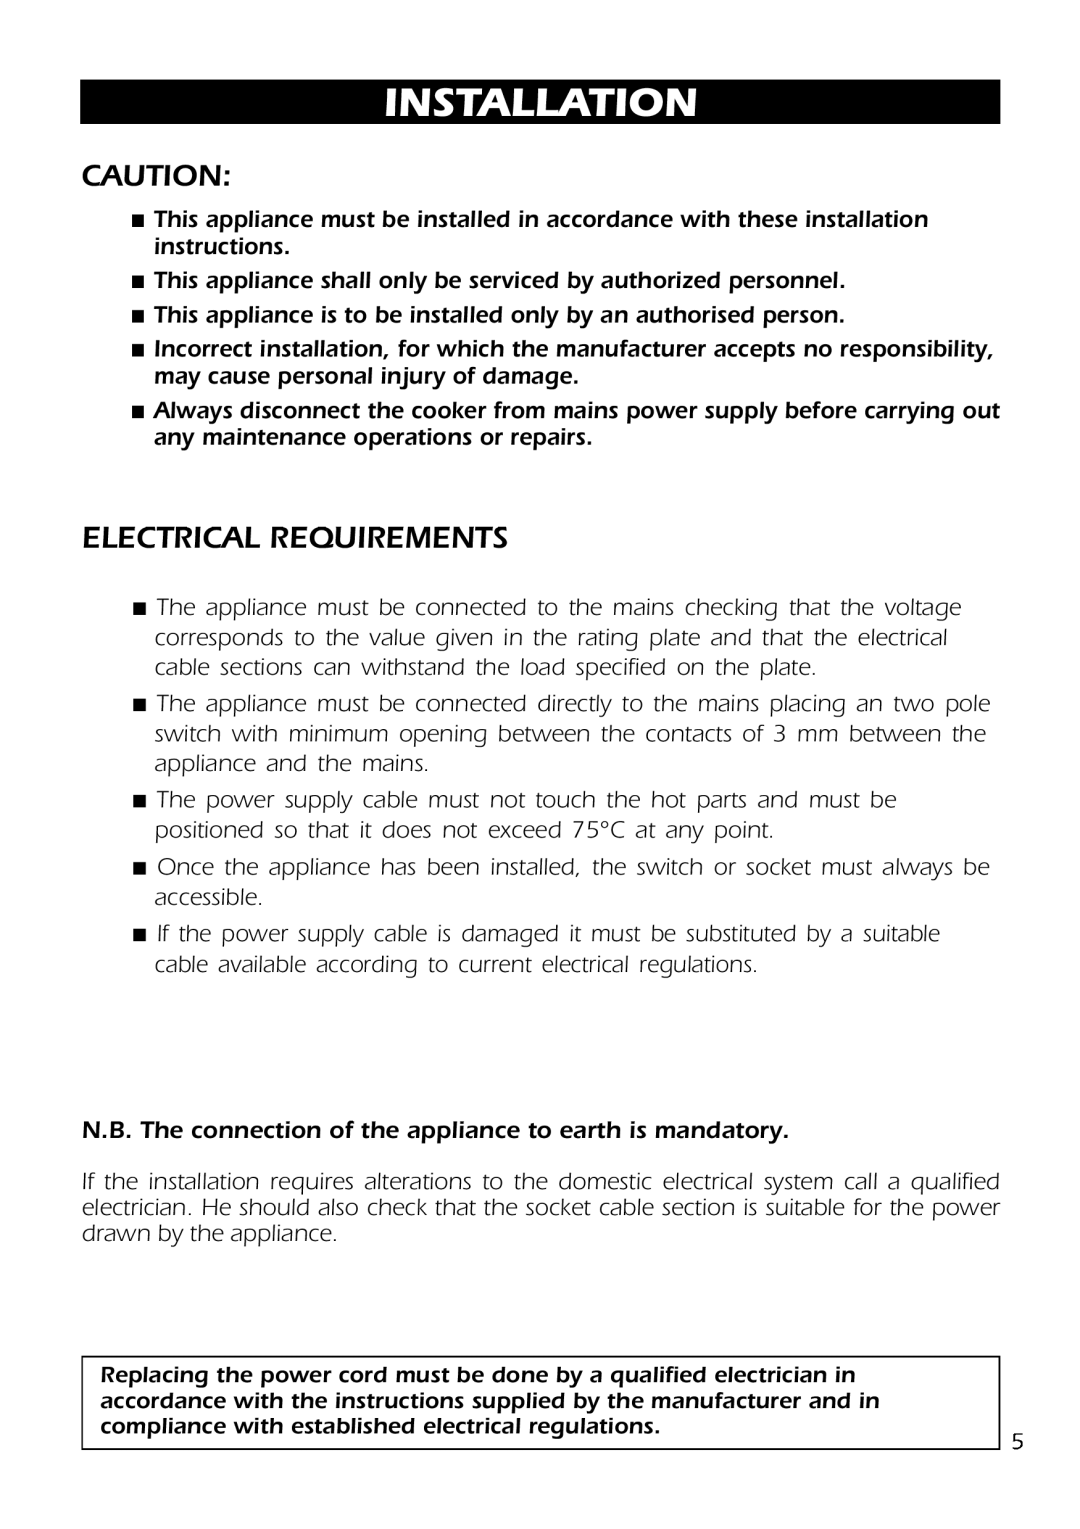 DeLonghi D 61 E manual Installation, Electrical Requirements 